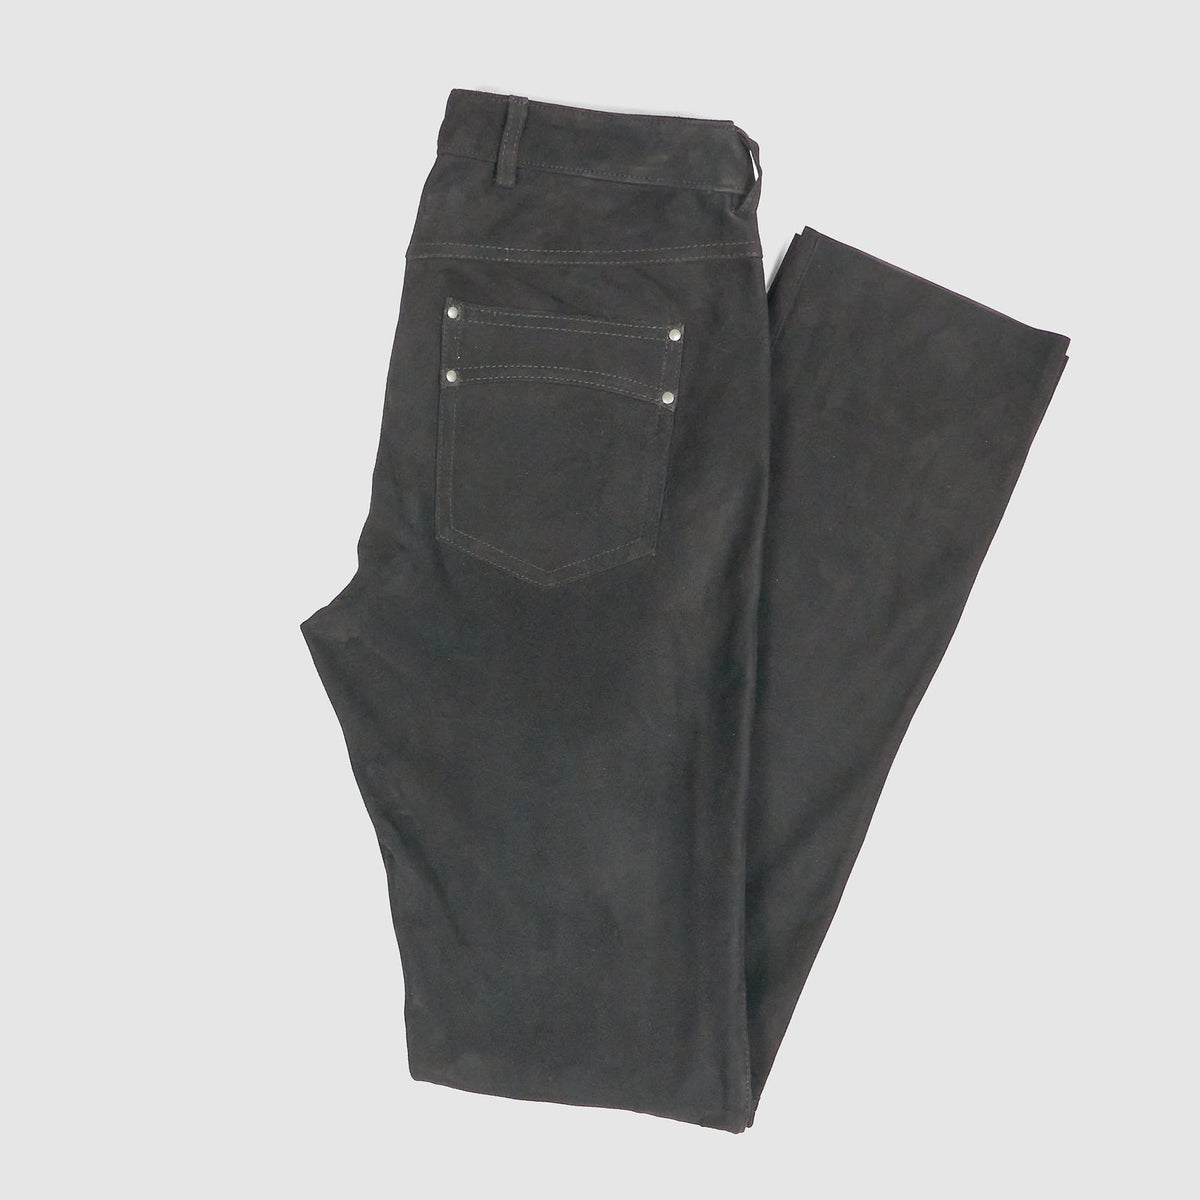 Meindl Ladies Five Pocket Leather Jeans